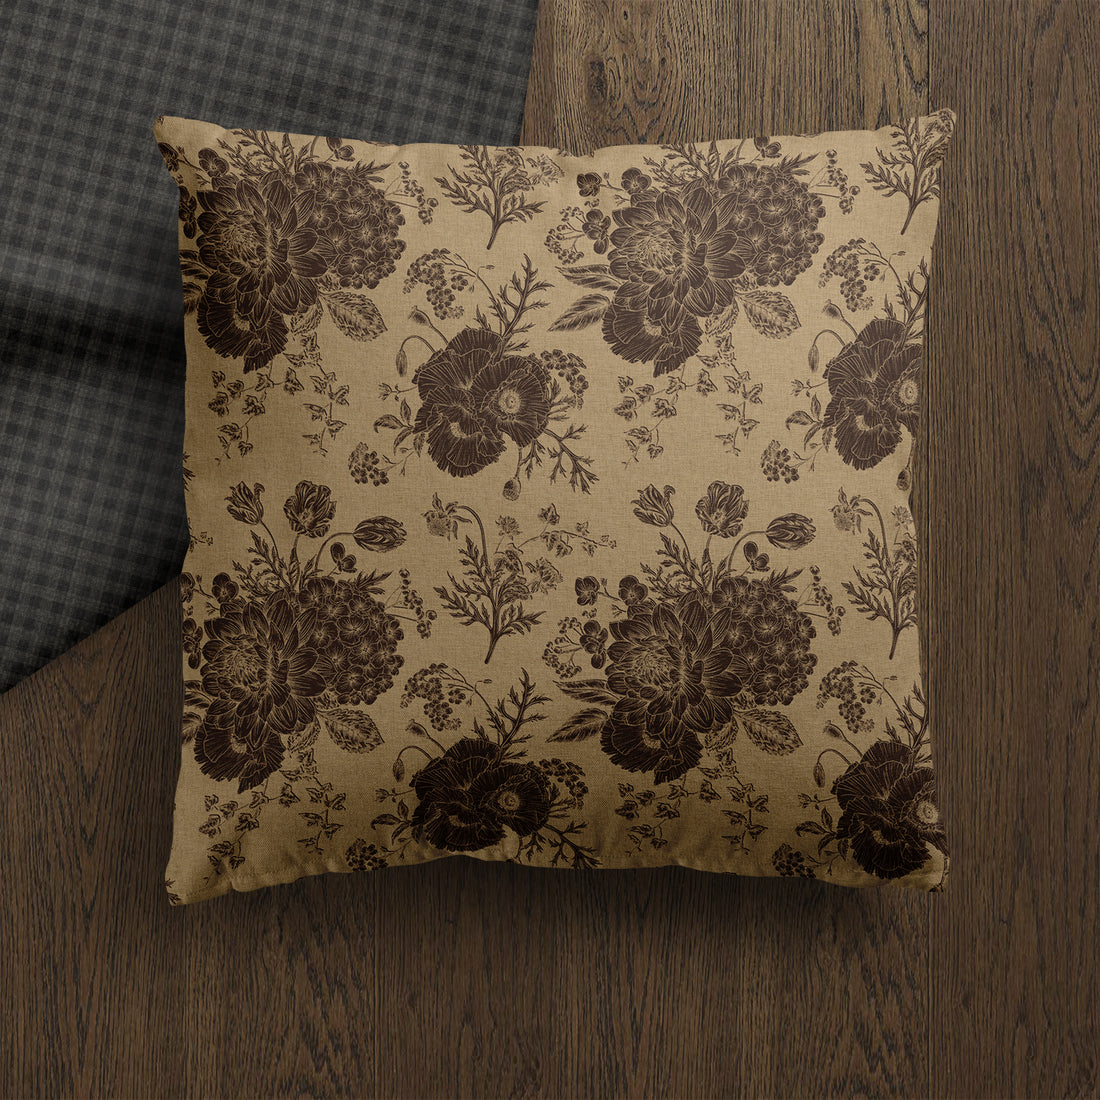 Thalassa Vintage Style Floral Throw Pillow Cover